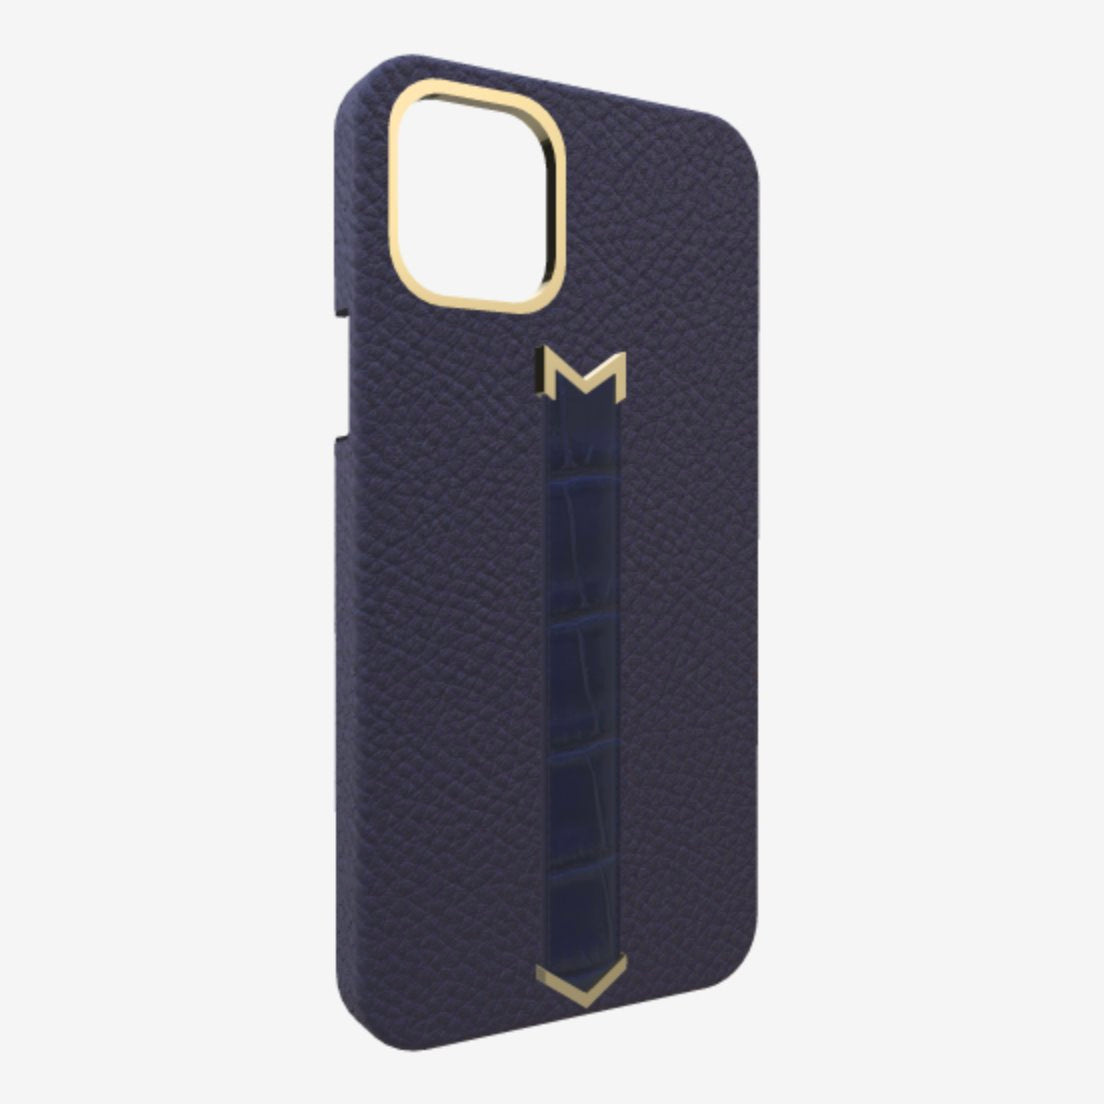 Gold Finger Strap Case for iPhone 13 Pro in Genuine Calfskin and Alligator Navy Blue Navy Blue 